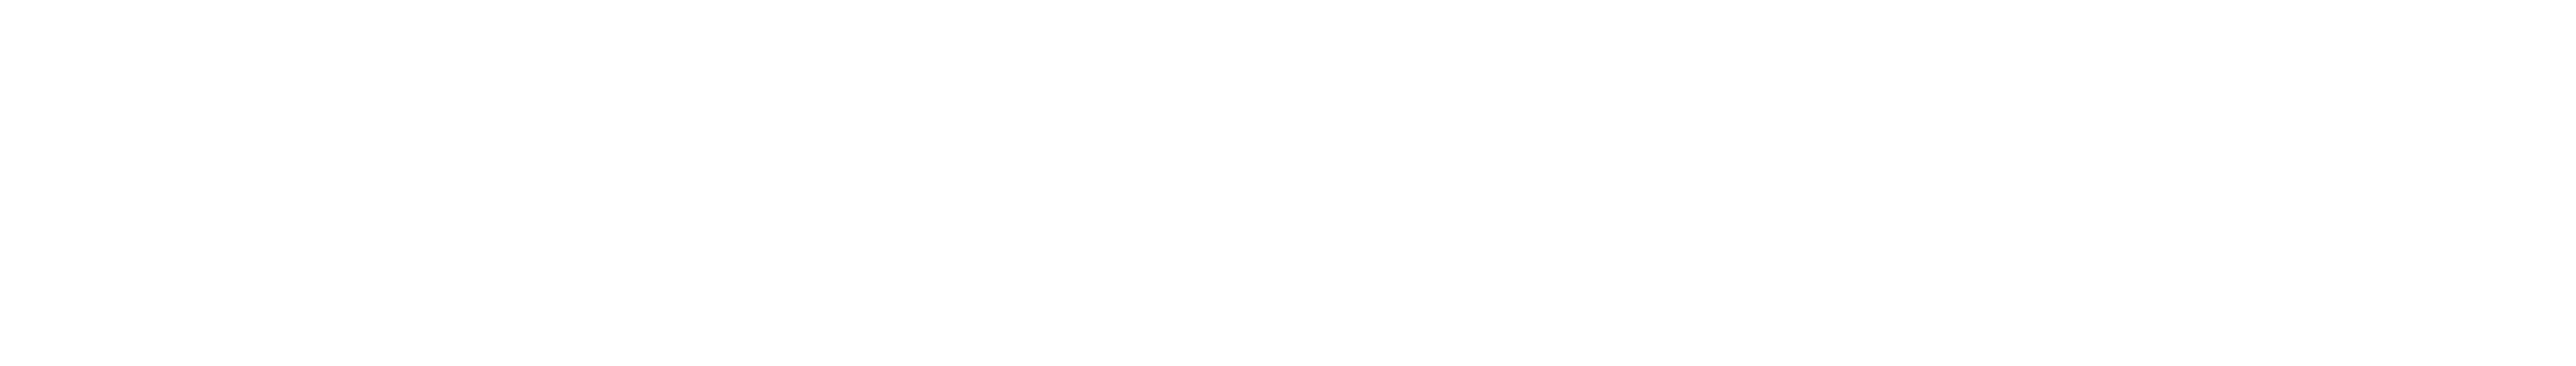 RippleMatch logo in white